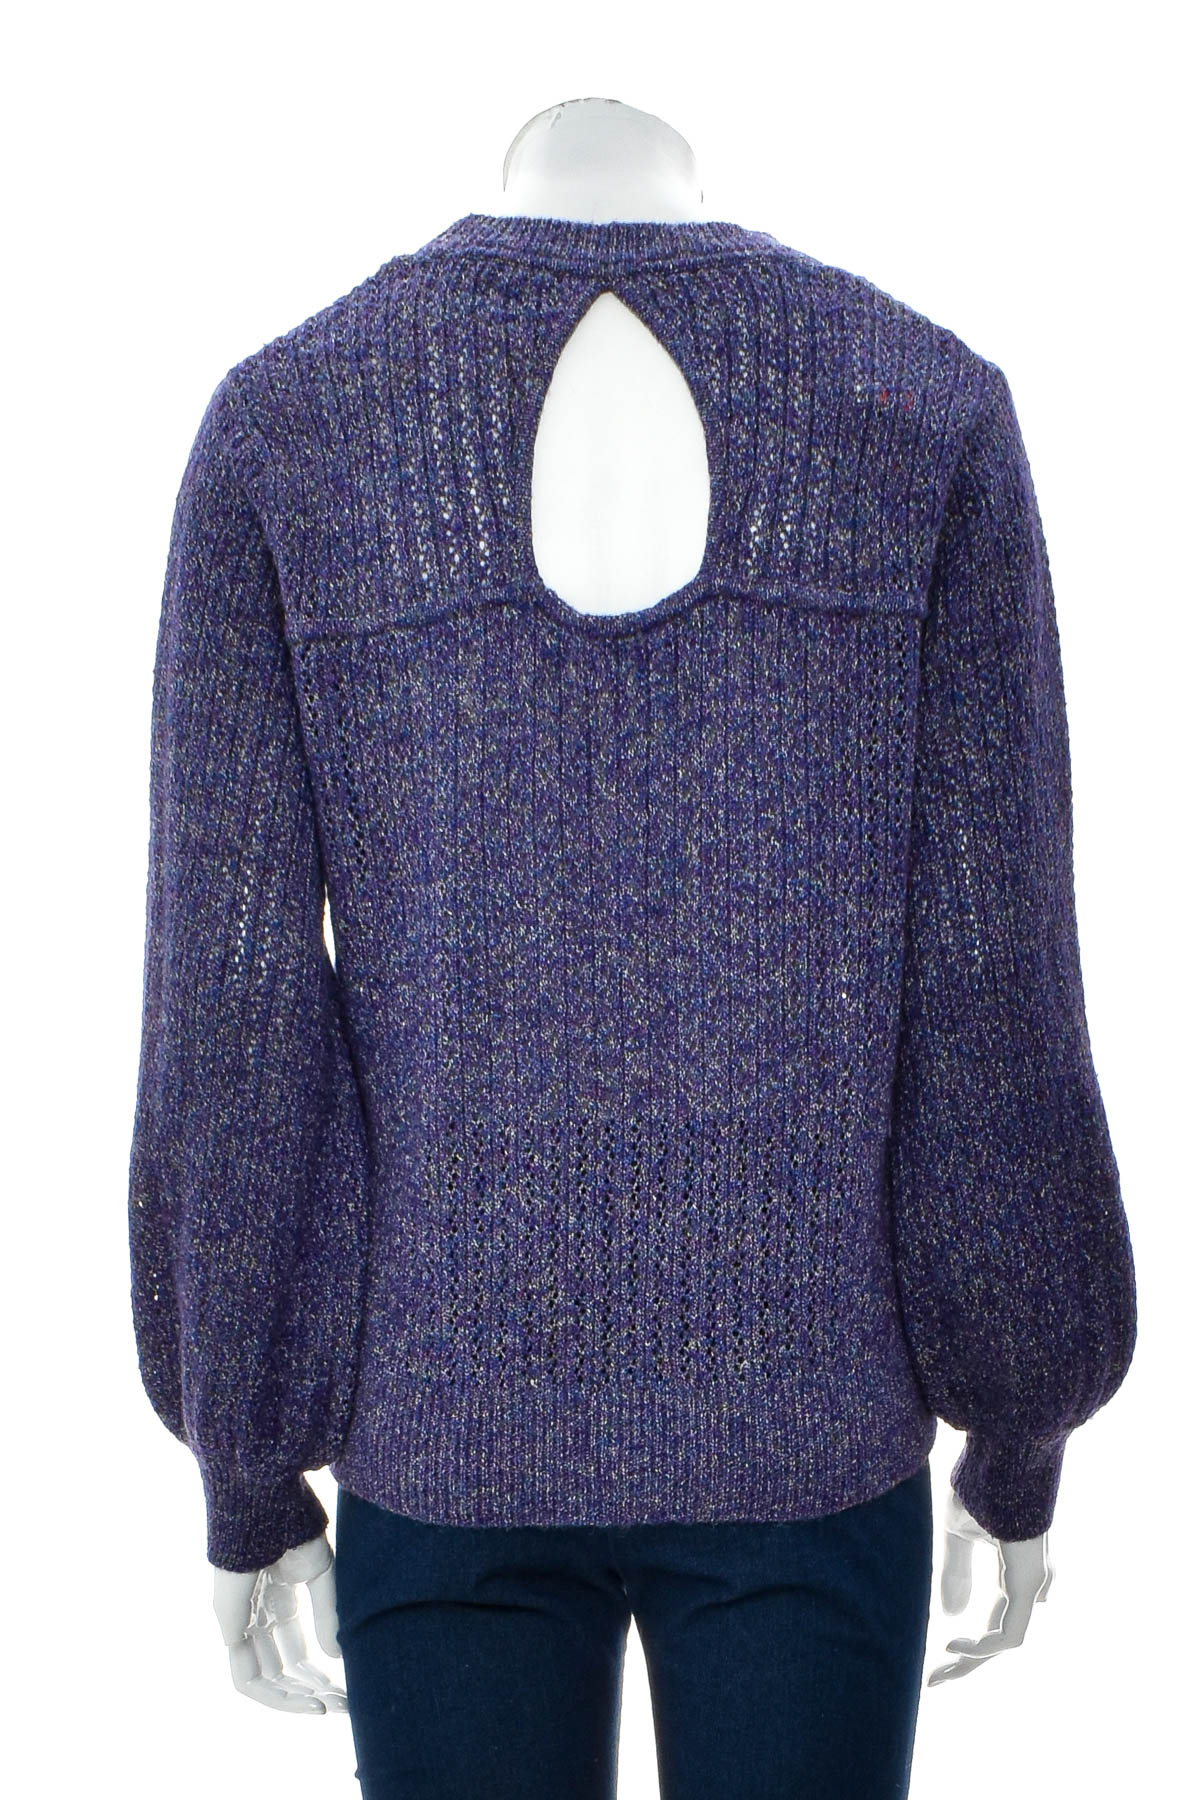 Women's sweater - Pepe Jeans - 1